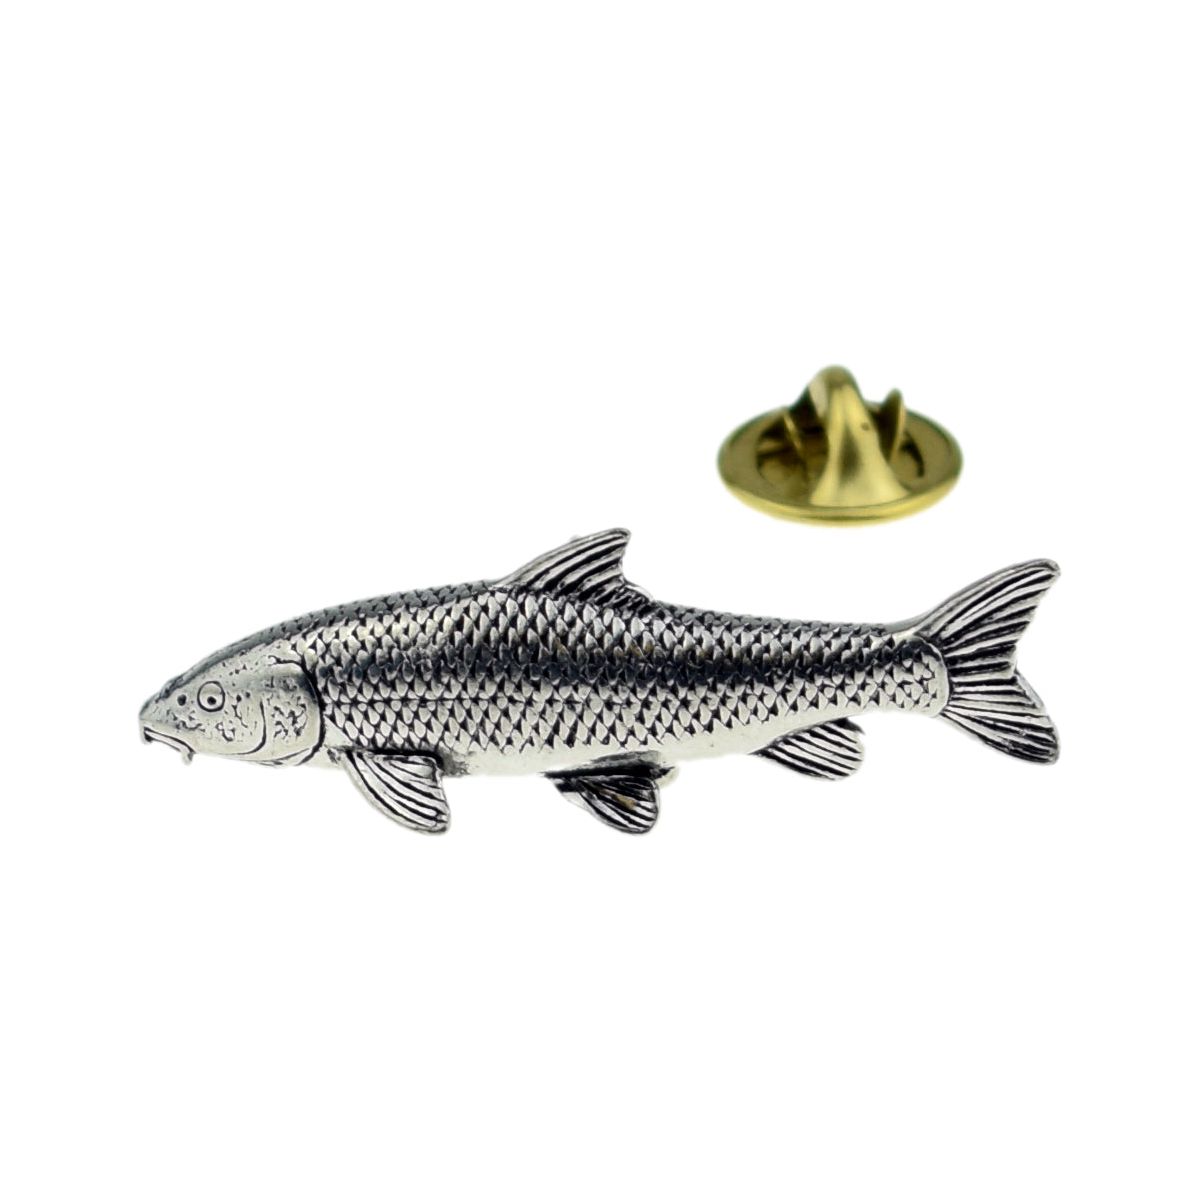 Barbel Fish Pewter Lapel Pin Badge - Ashton and Finch